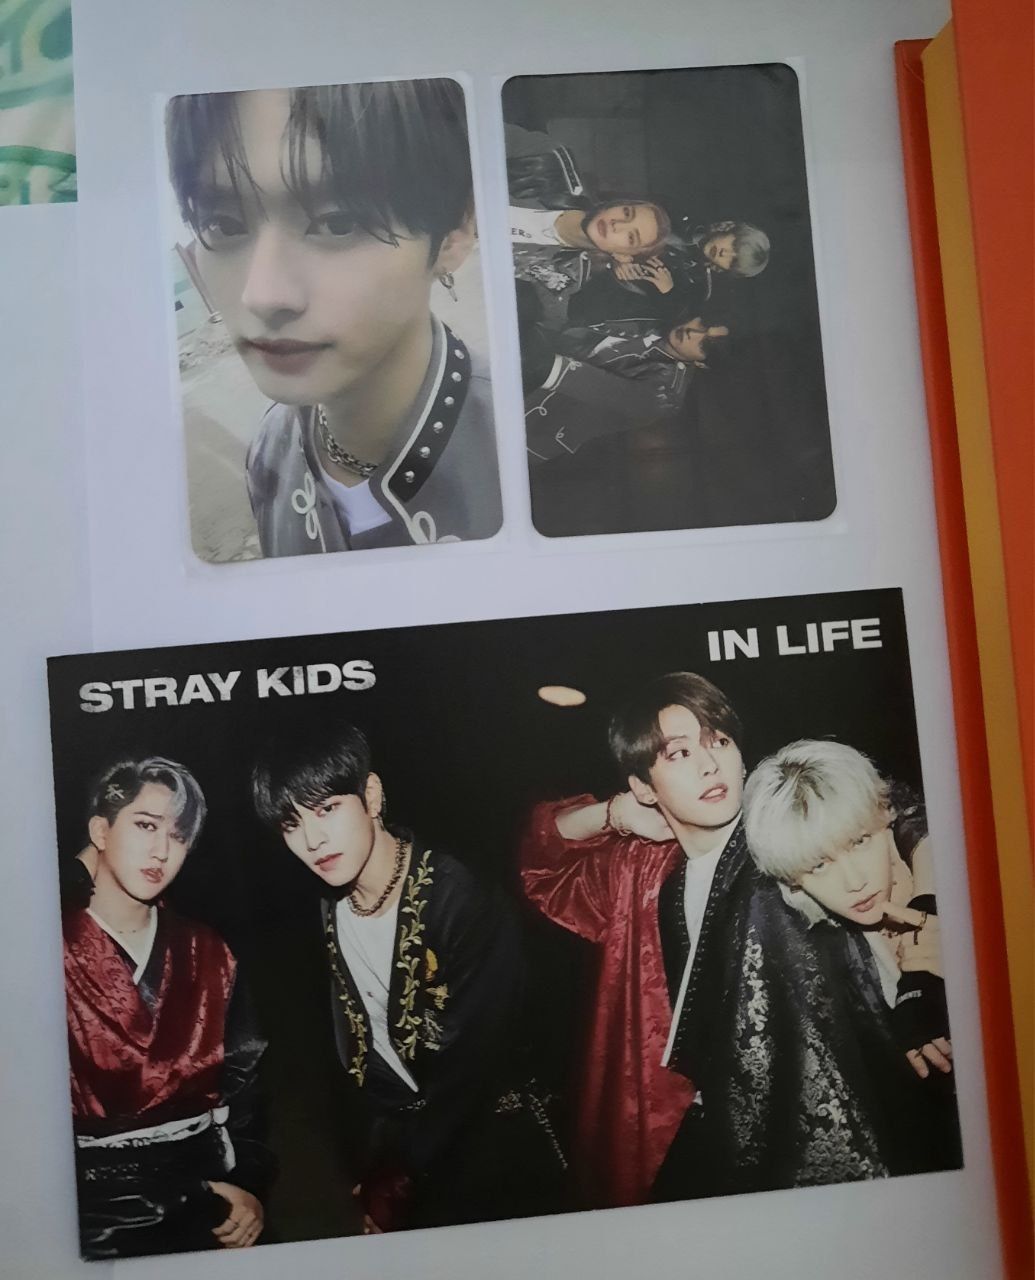 Альбом Stray Kids "IN LIFE" (K-pop/К-поп)